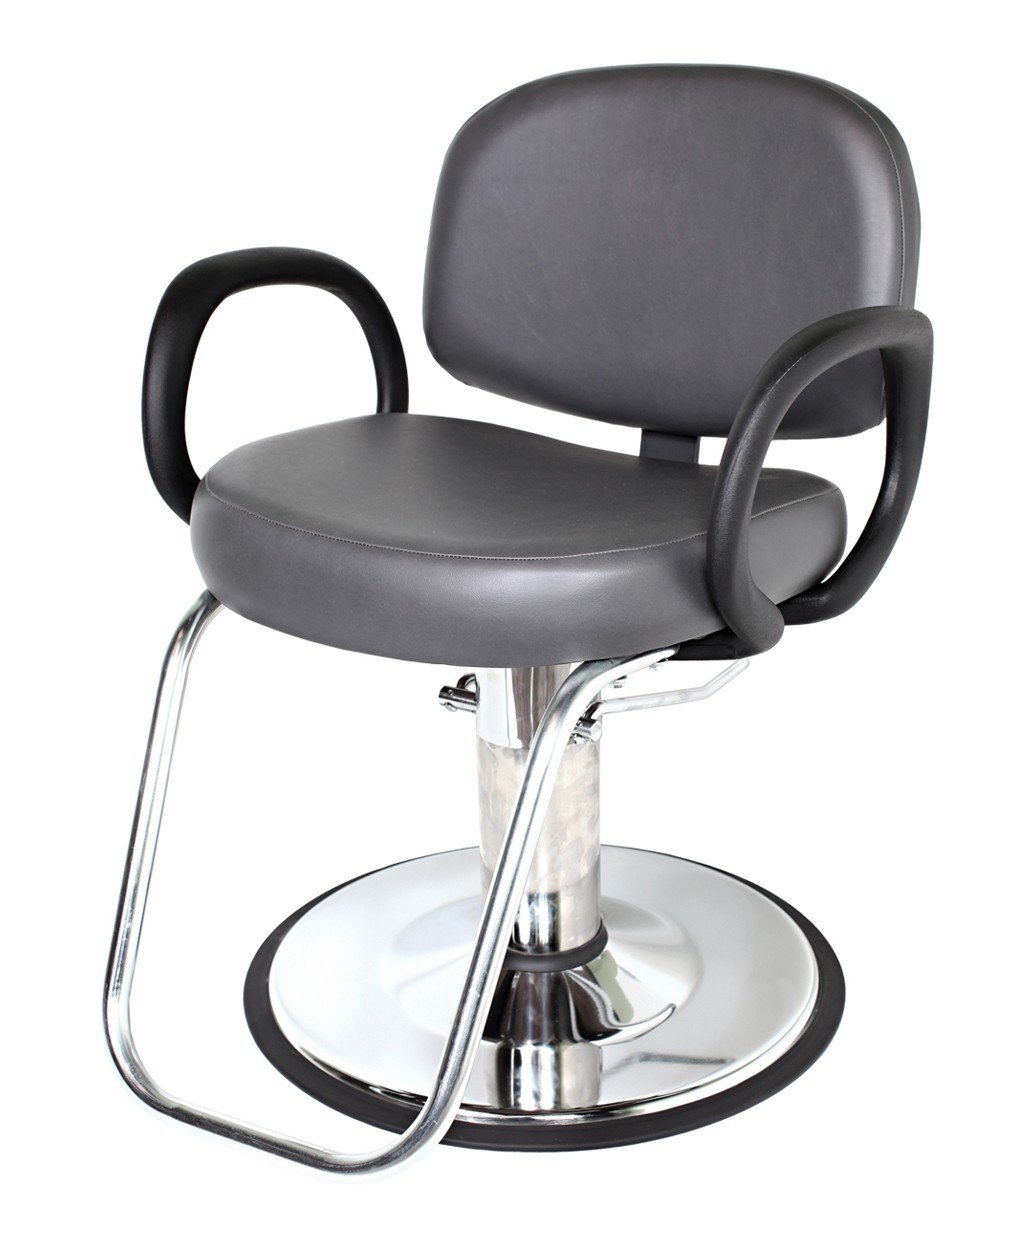 Collins QSE 1600 Kiva Styling Chair